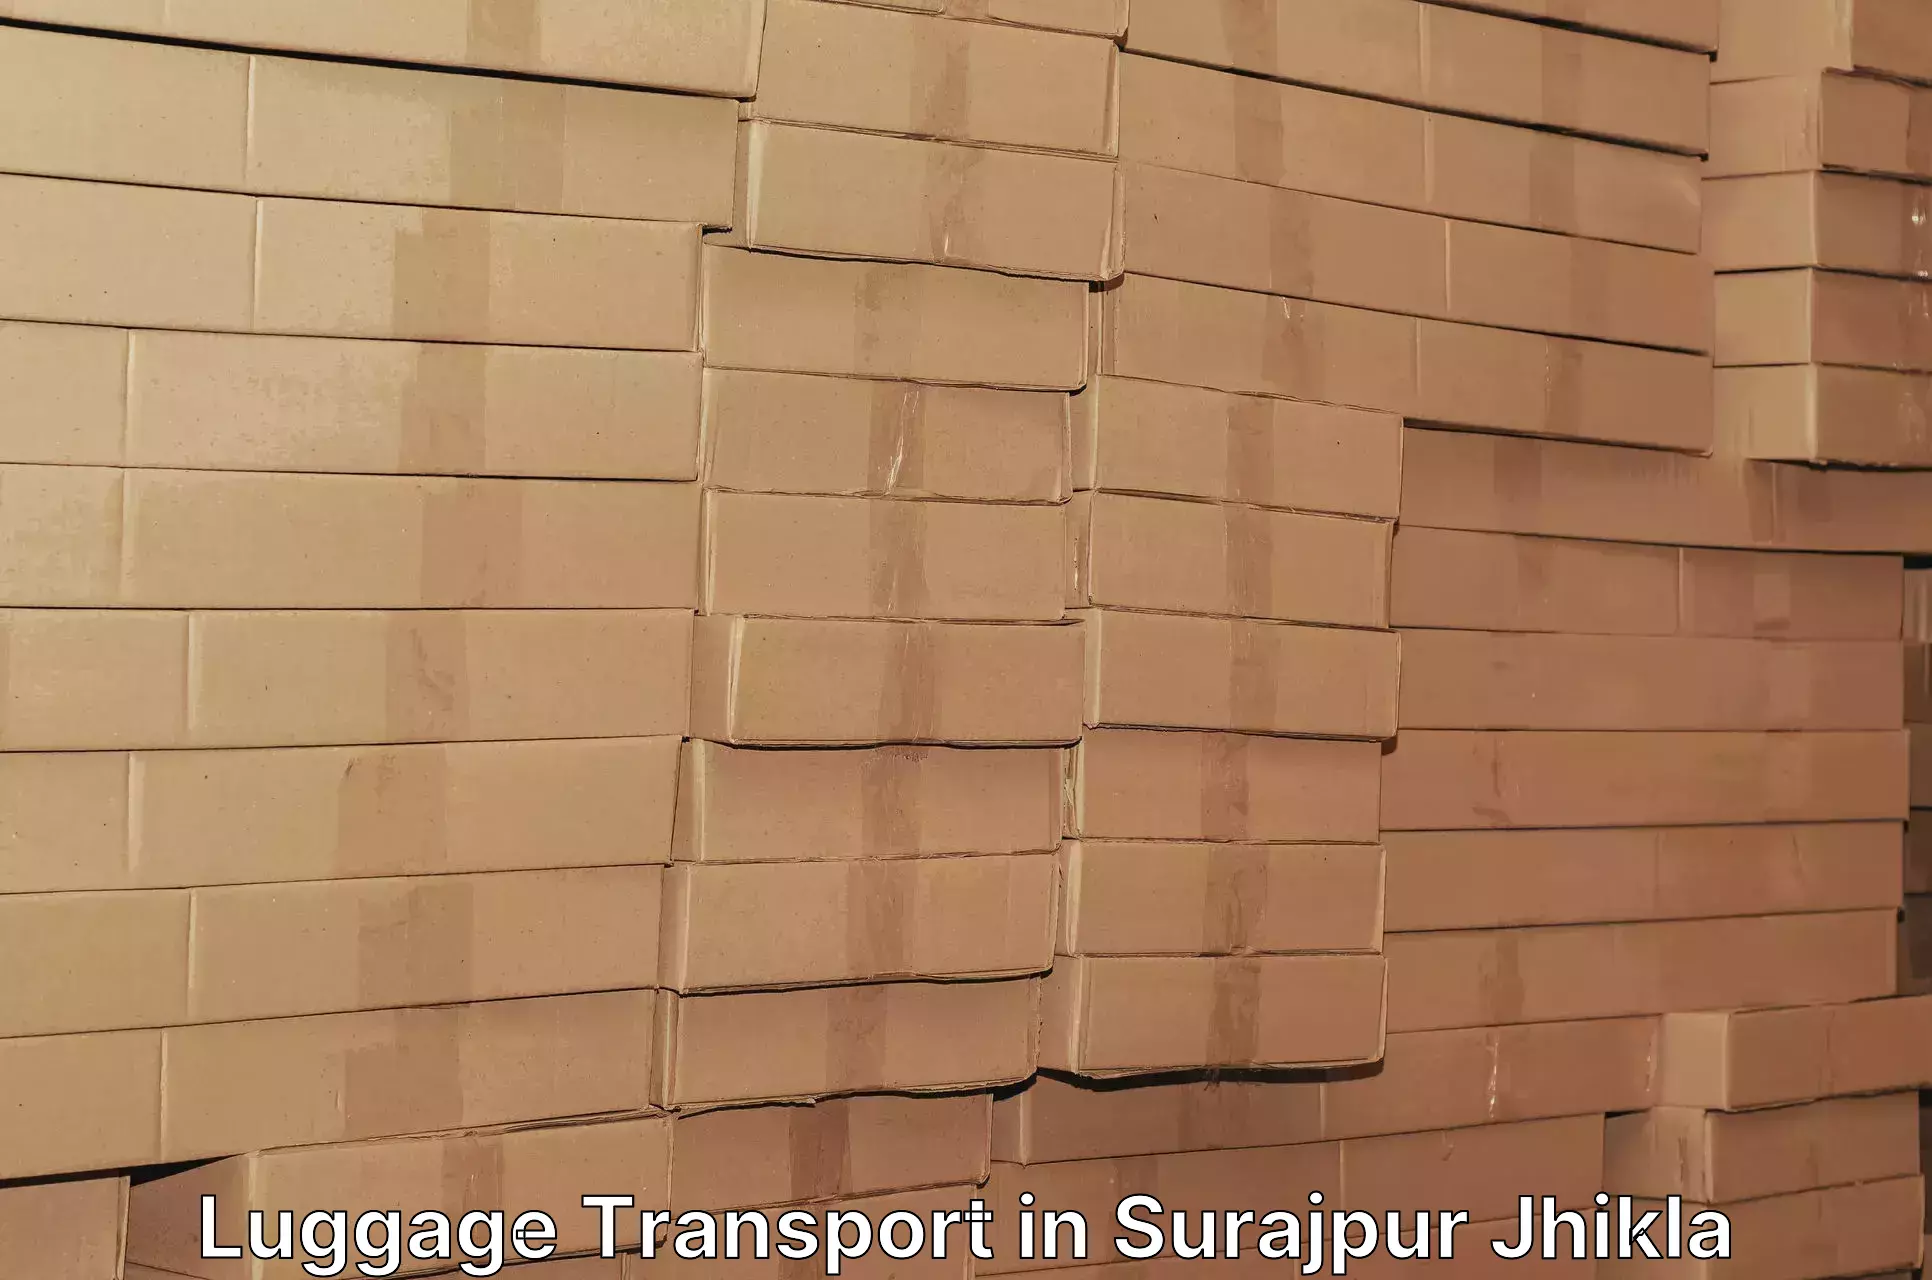 Luggage transport operations in Surajpur Jhikla